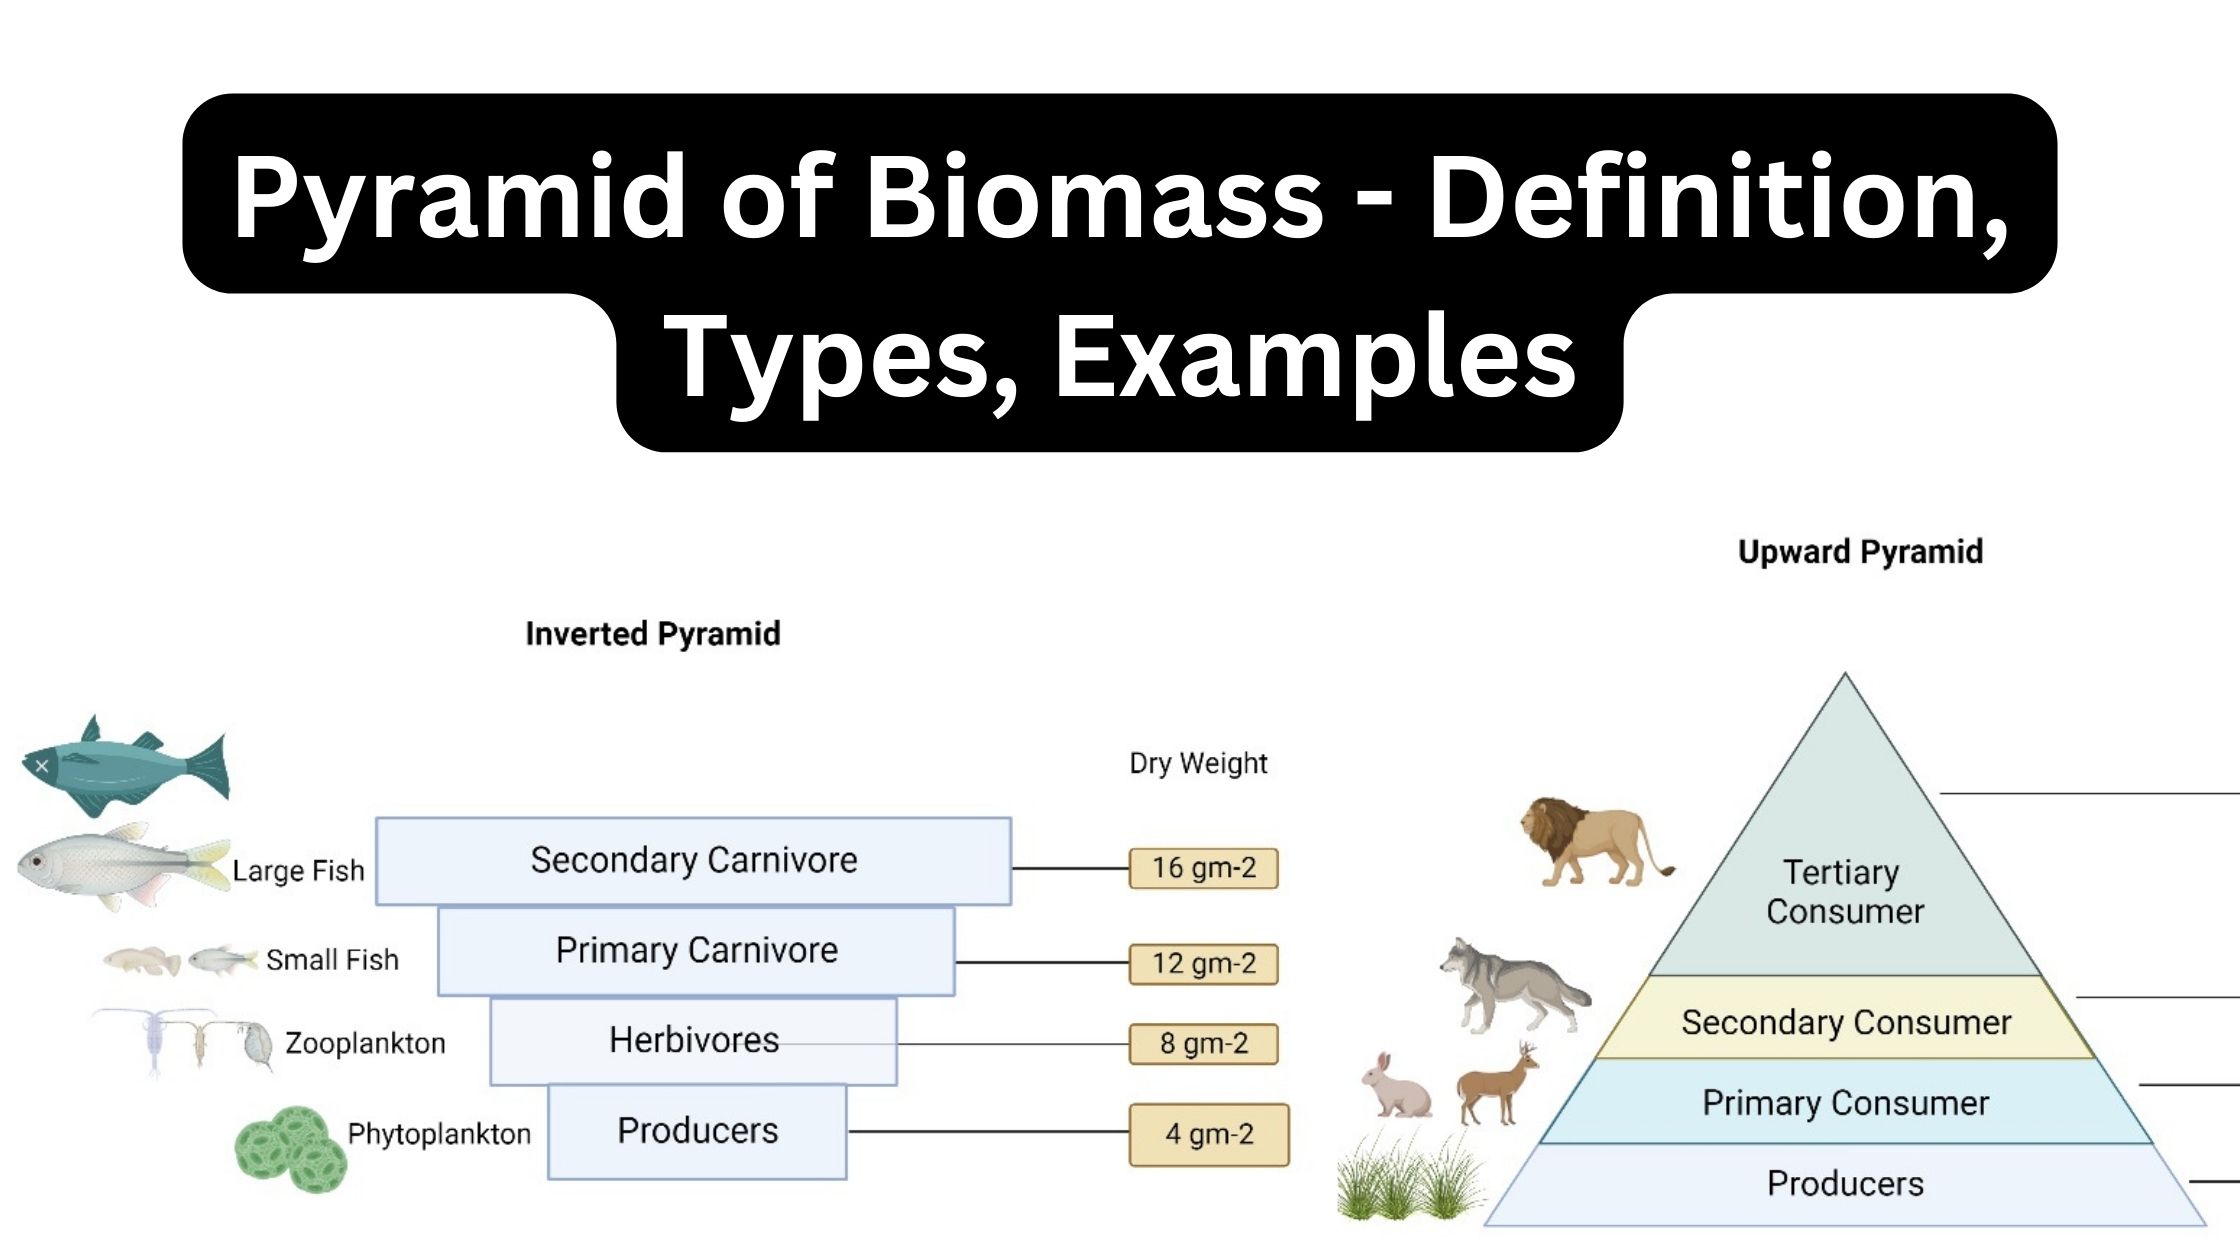 types of biomass